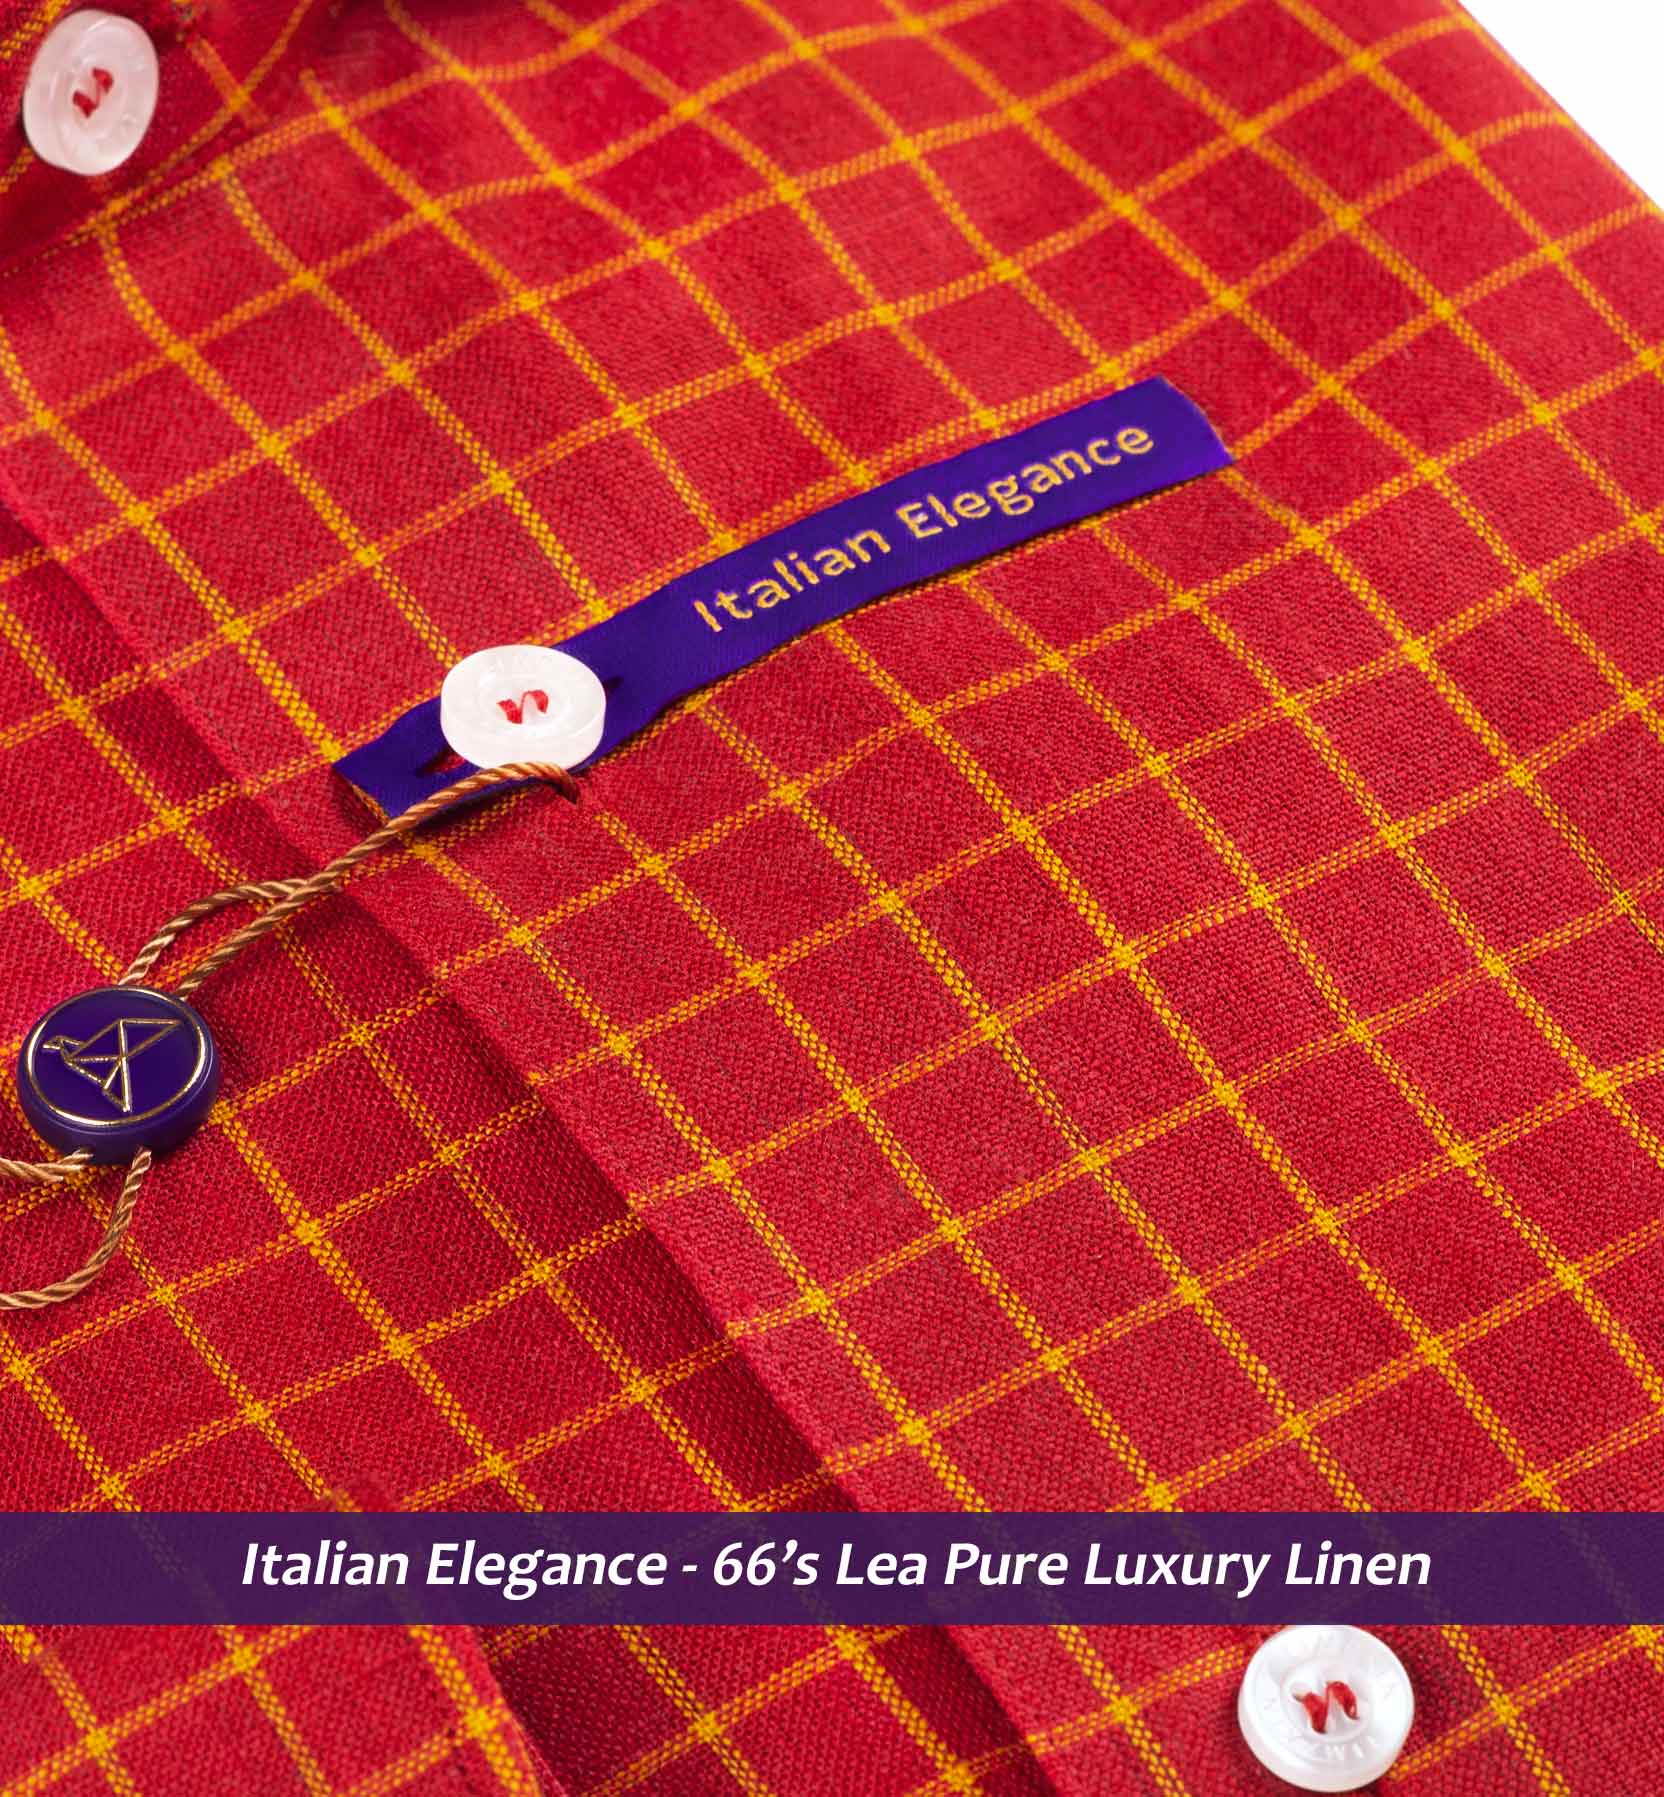 Antwerp- Scarlet Red & Lemon Yellow Check- 66's Lea Pure Luxury Linen